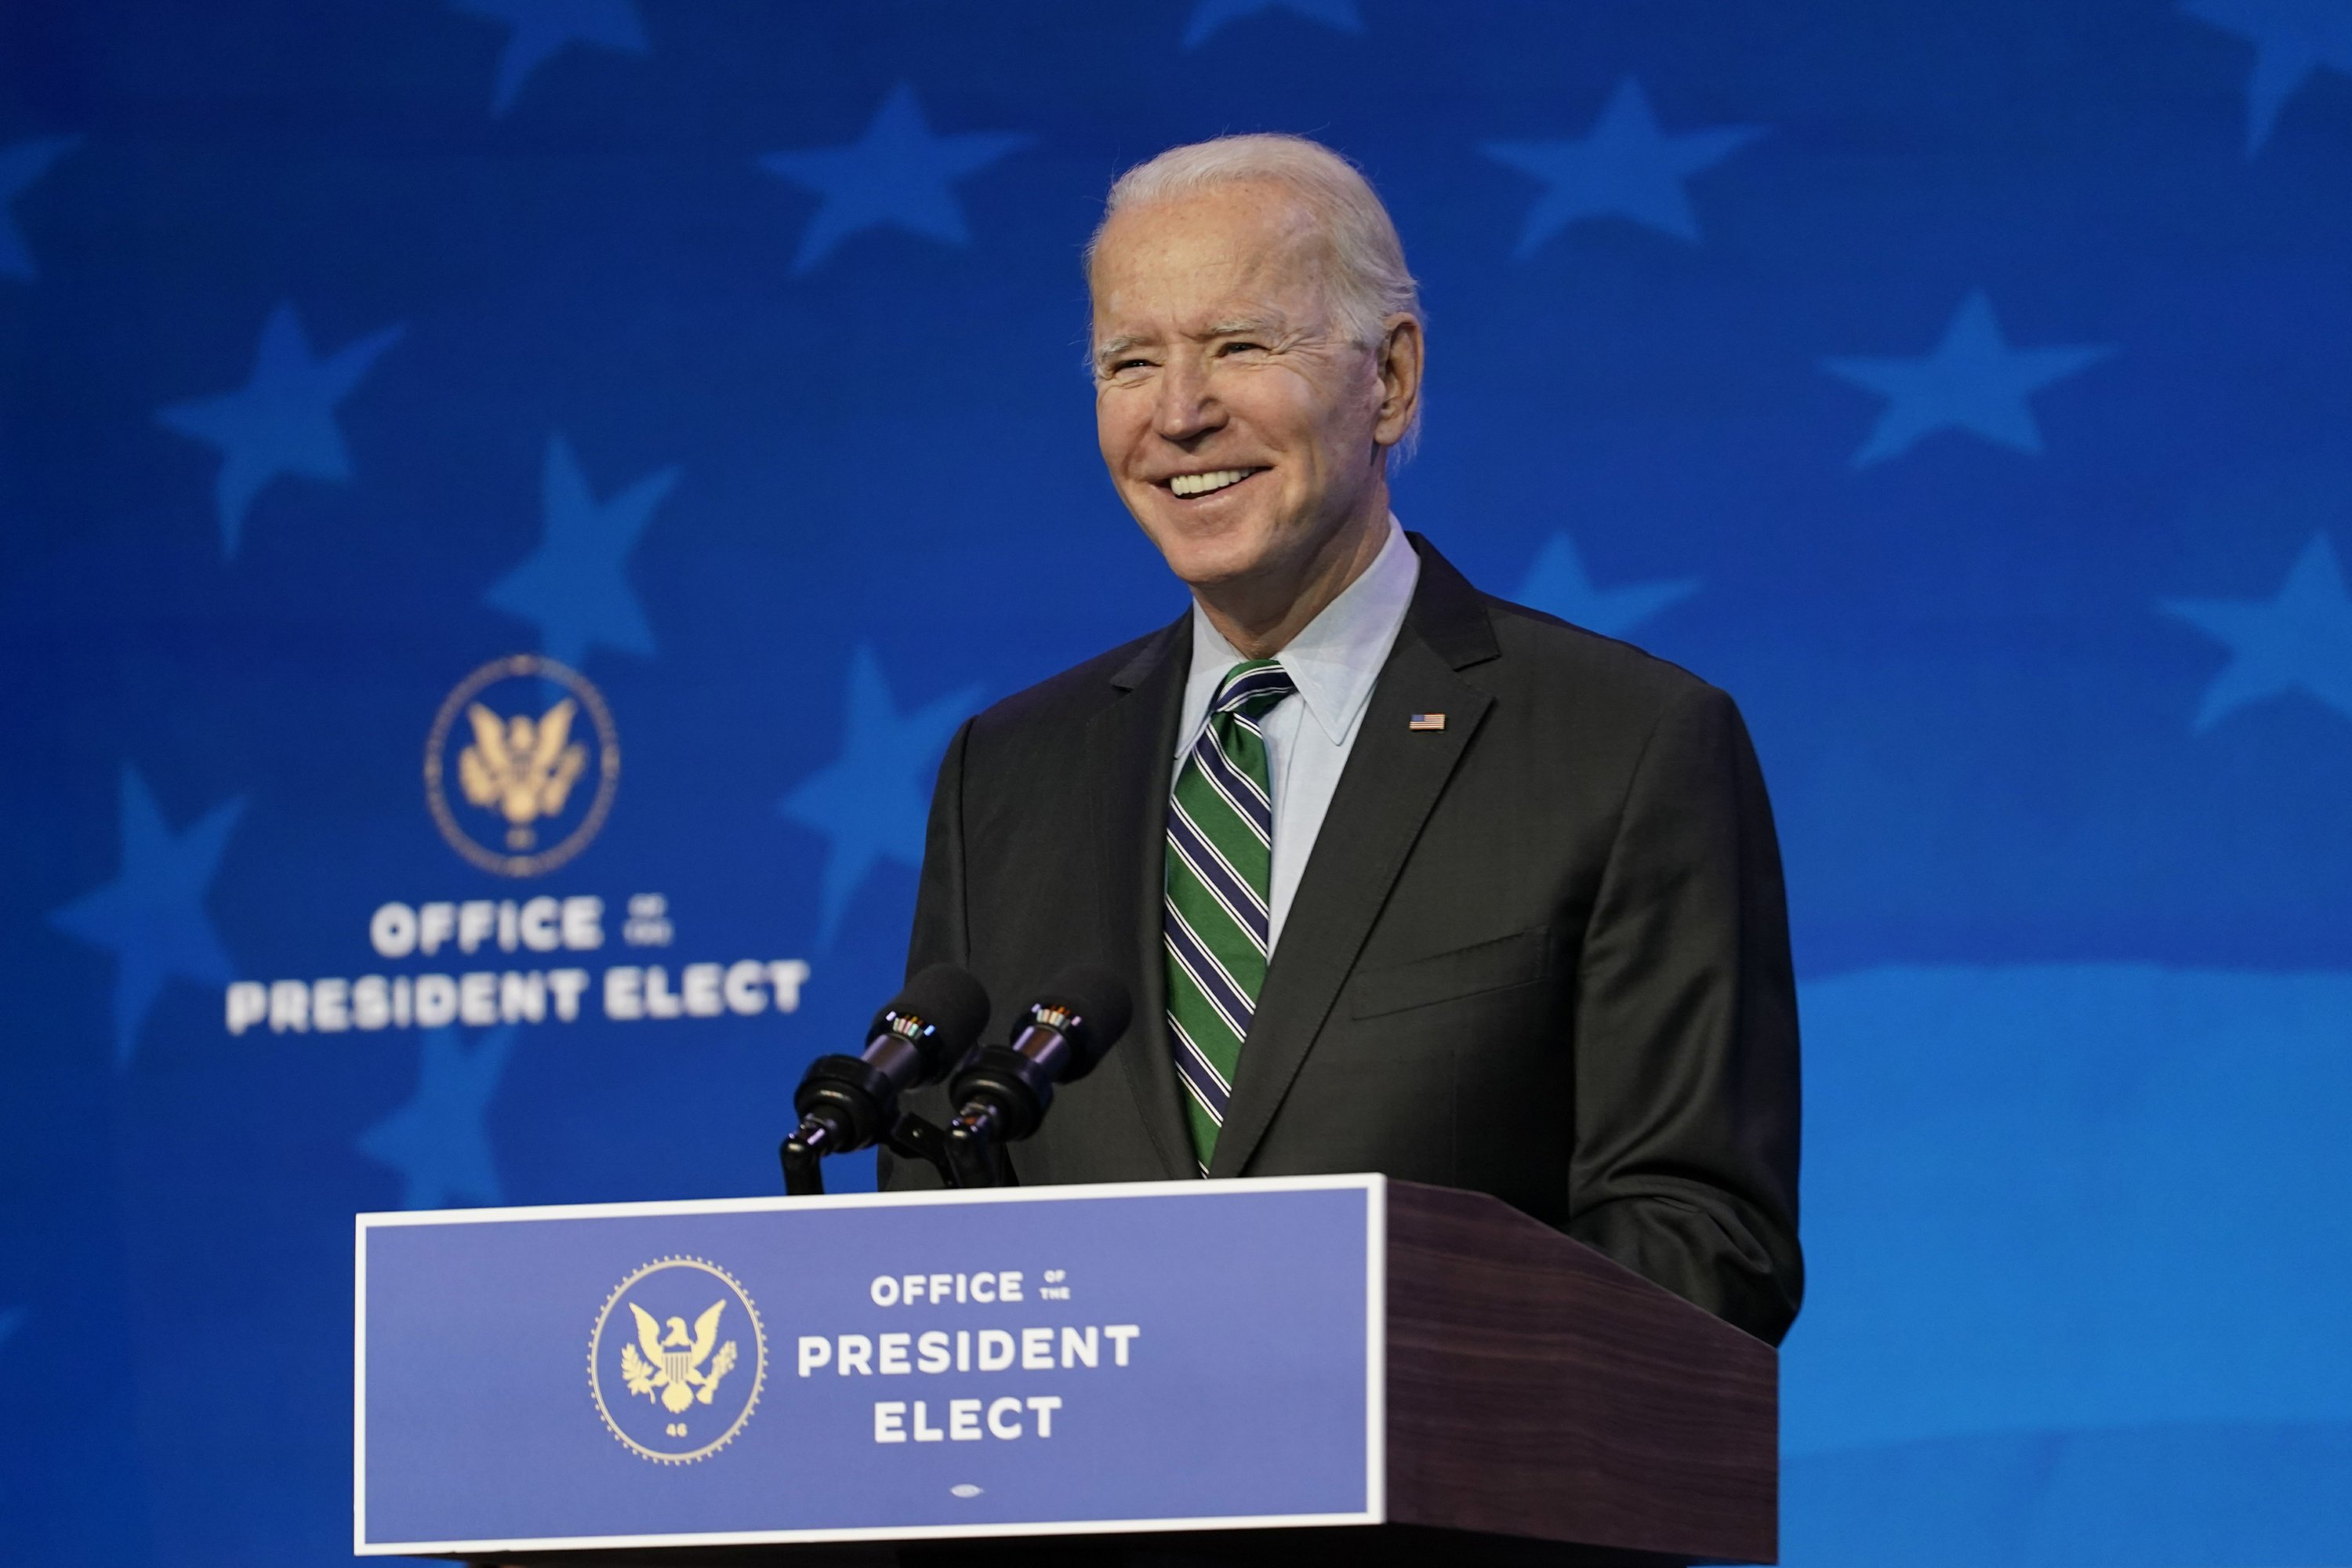 Biden outlines ‘Day One’ agenda for executive action